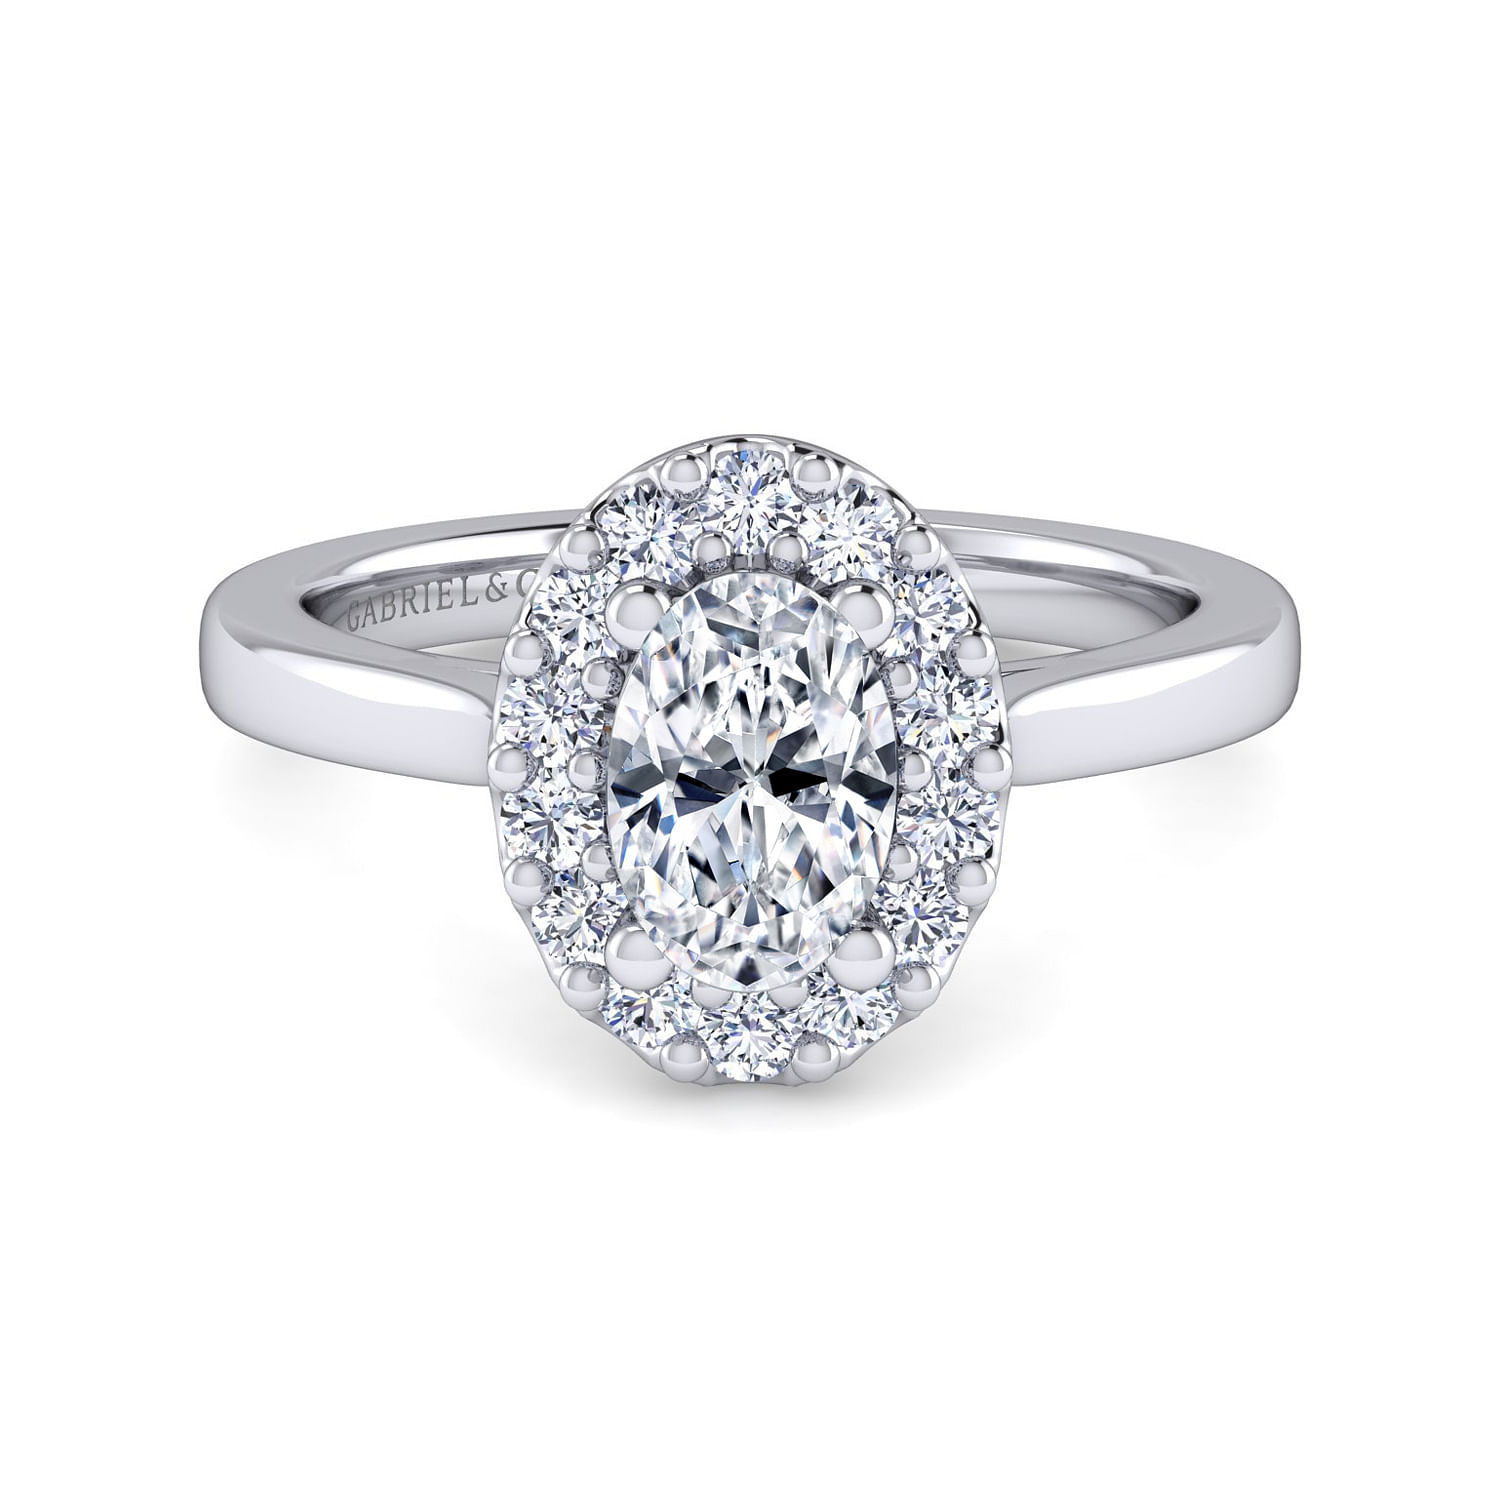 Lana - 14K White Gold Oval Halo Diamond Engagement Ring